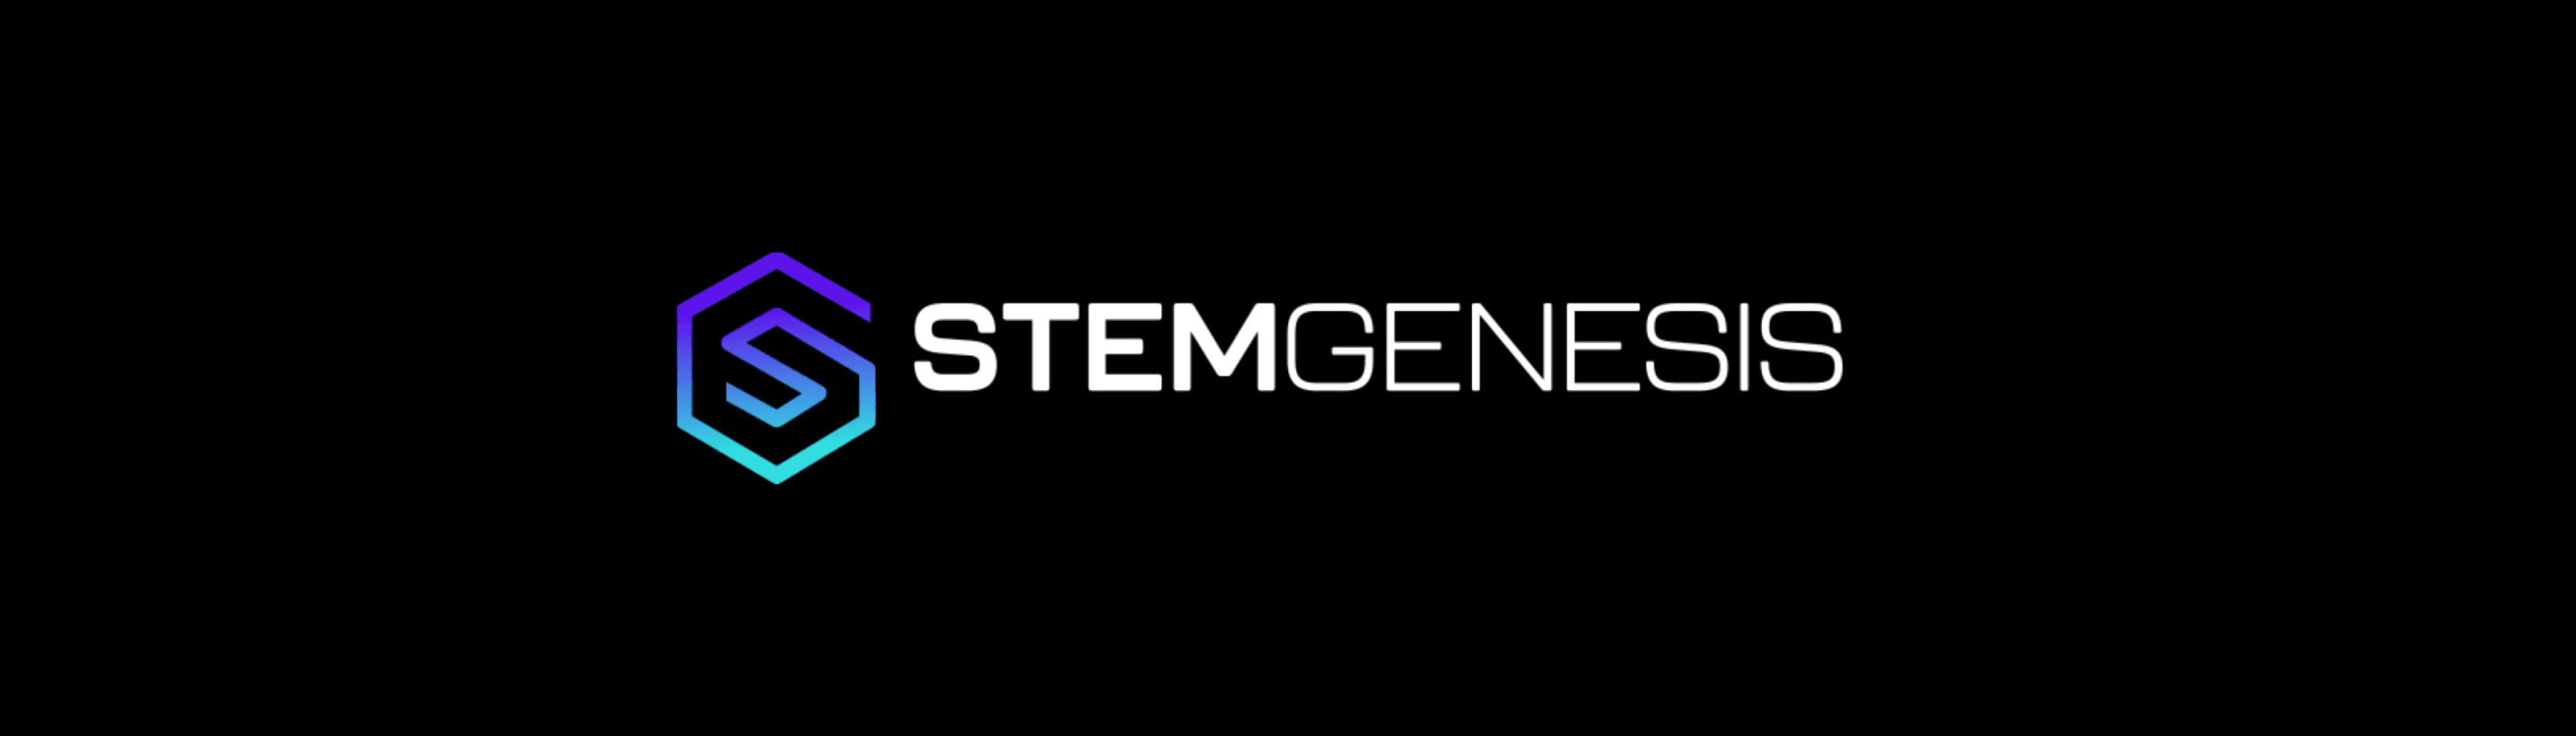 STEMgenesis バナー